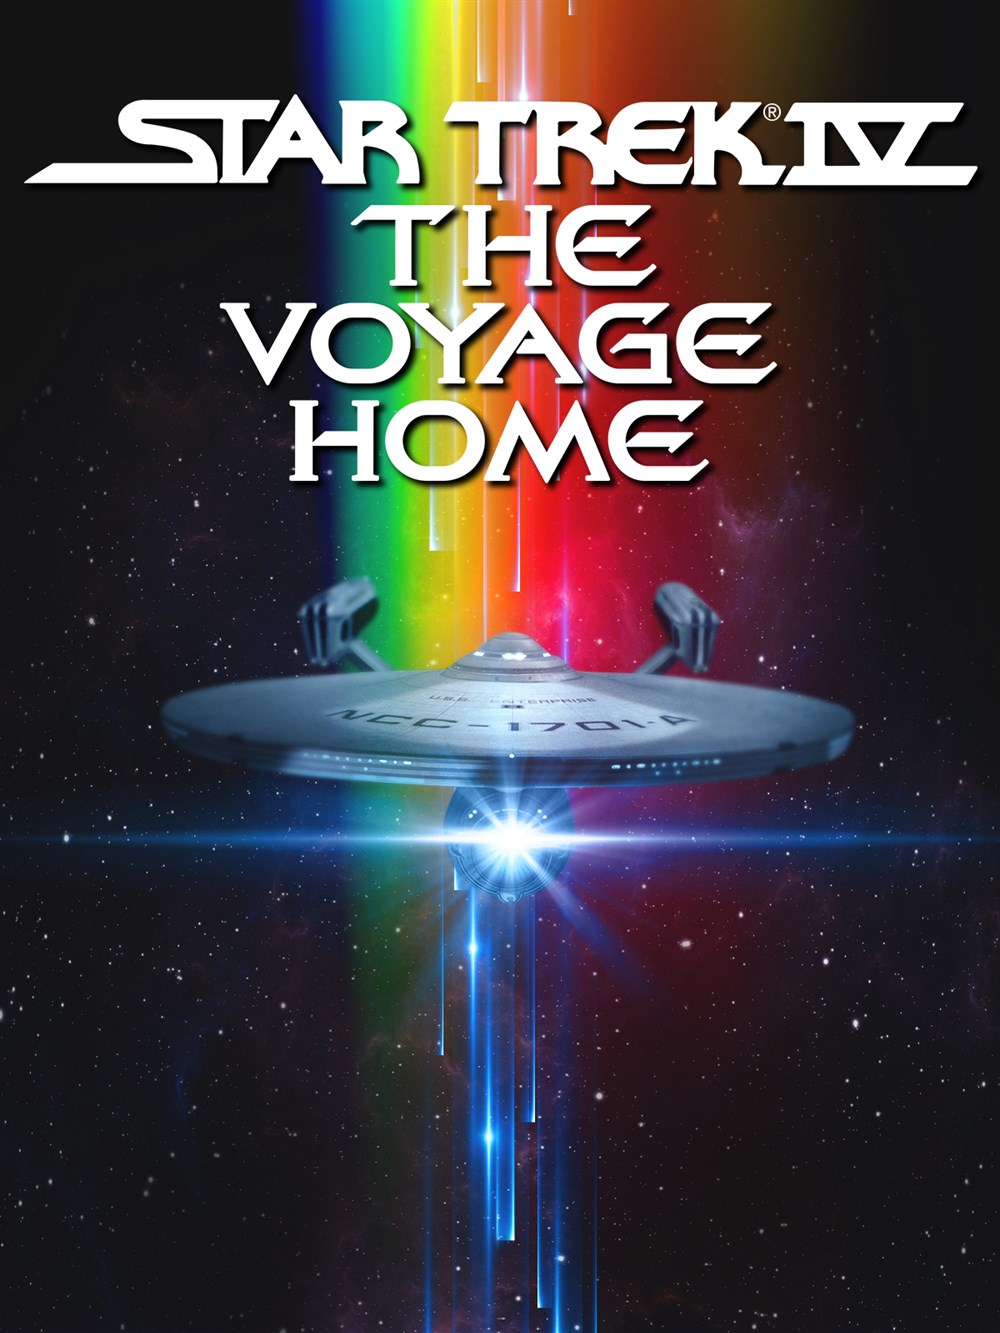 star trek 4 the voyage home enterprise